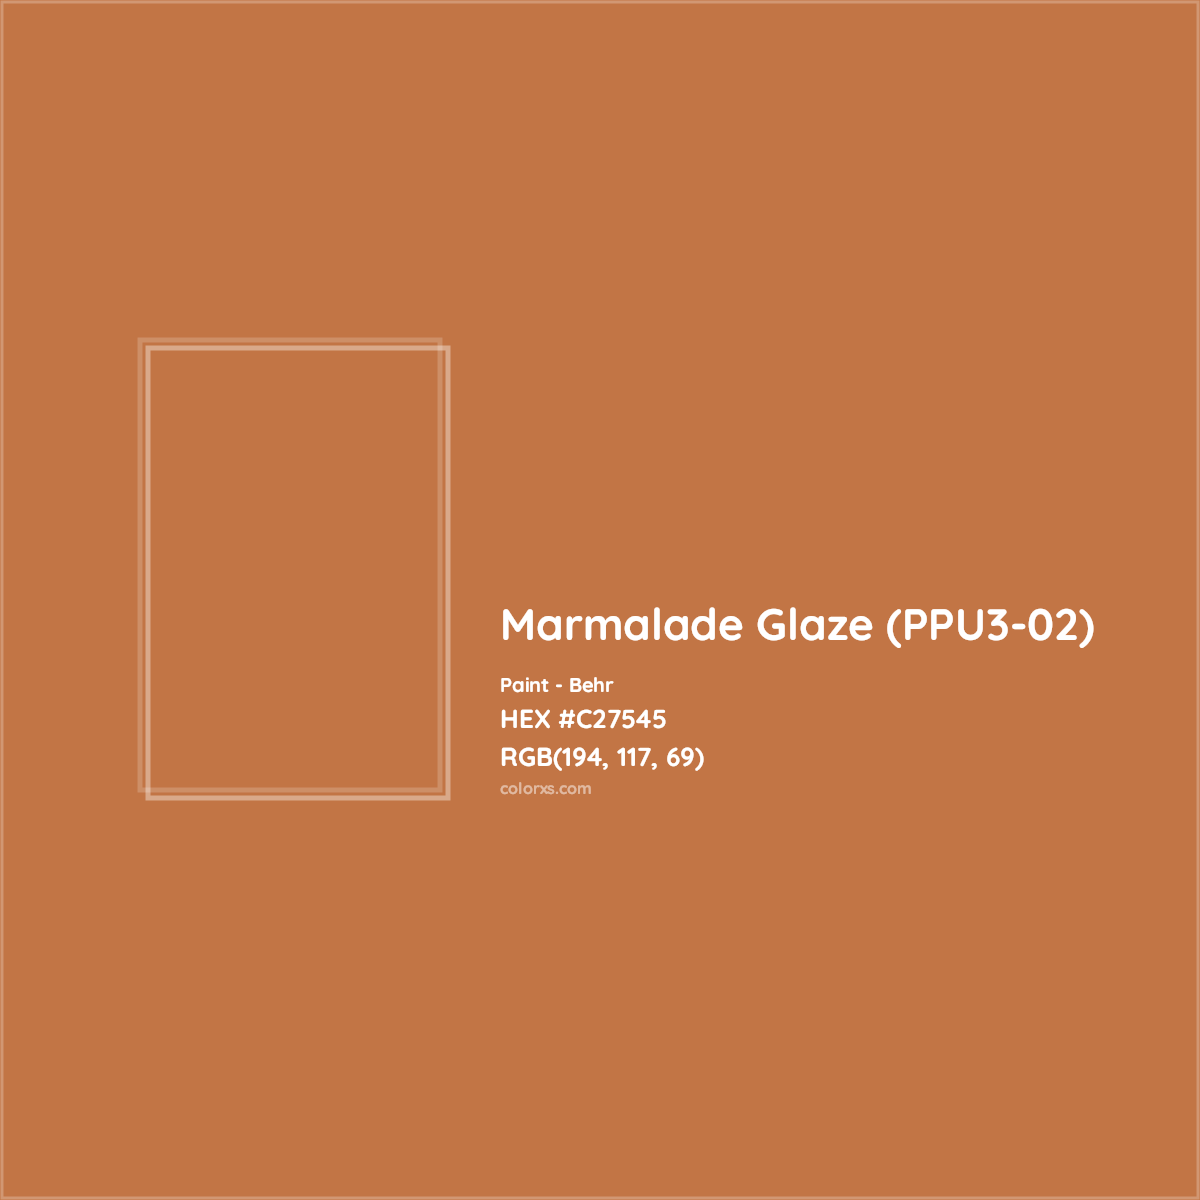 HEX #C27545 Marmalade Glaze (PPU3-02) Paint Behr - Color Code